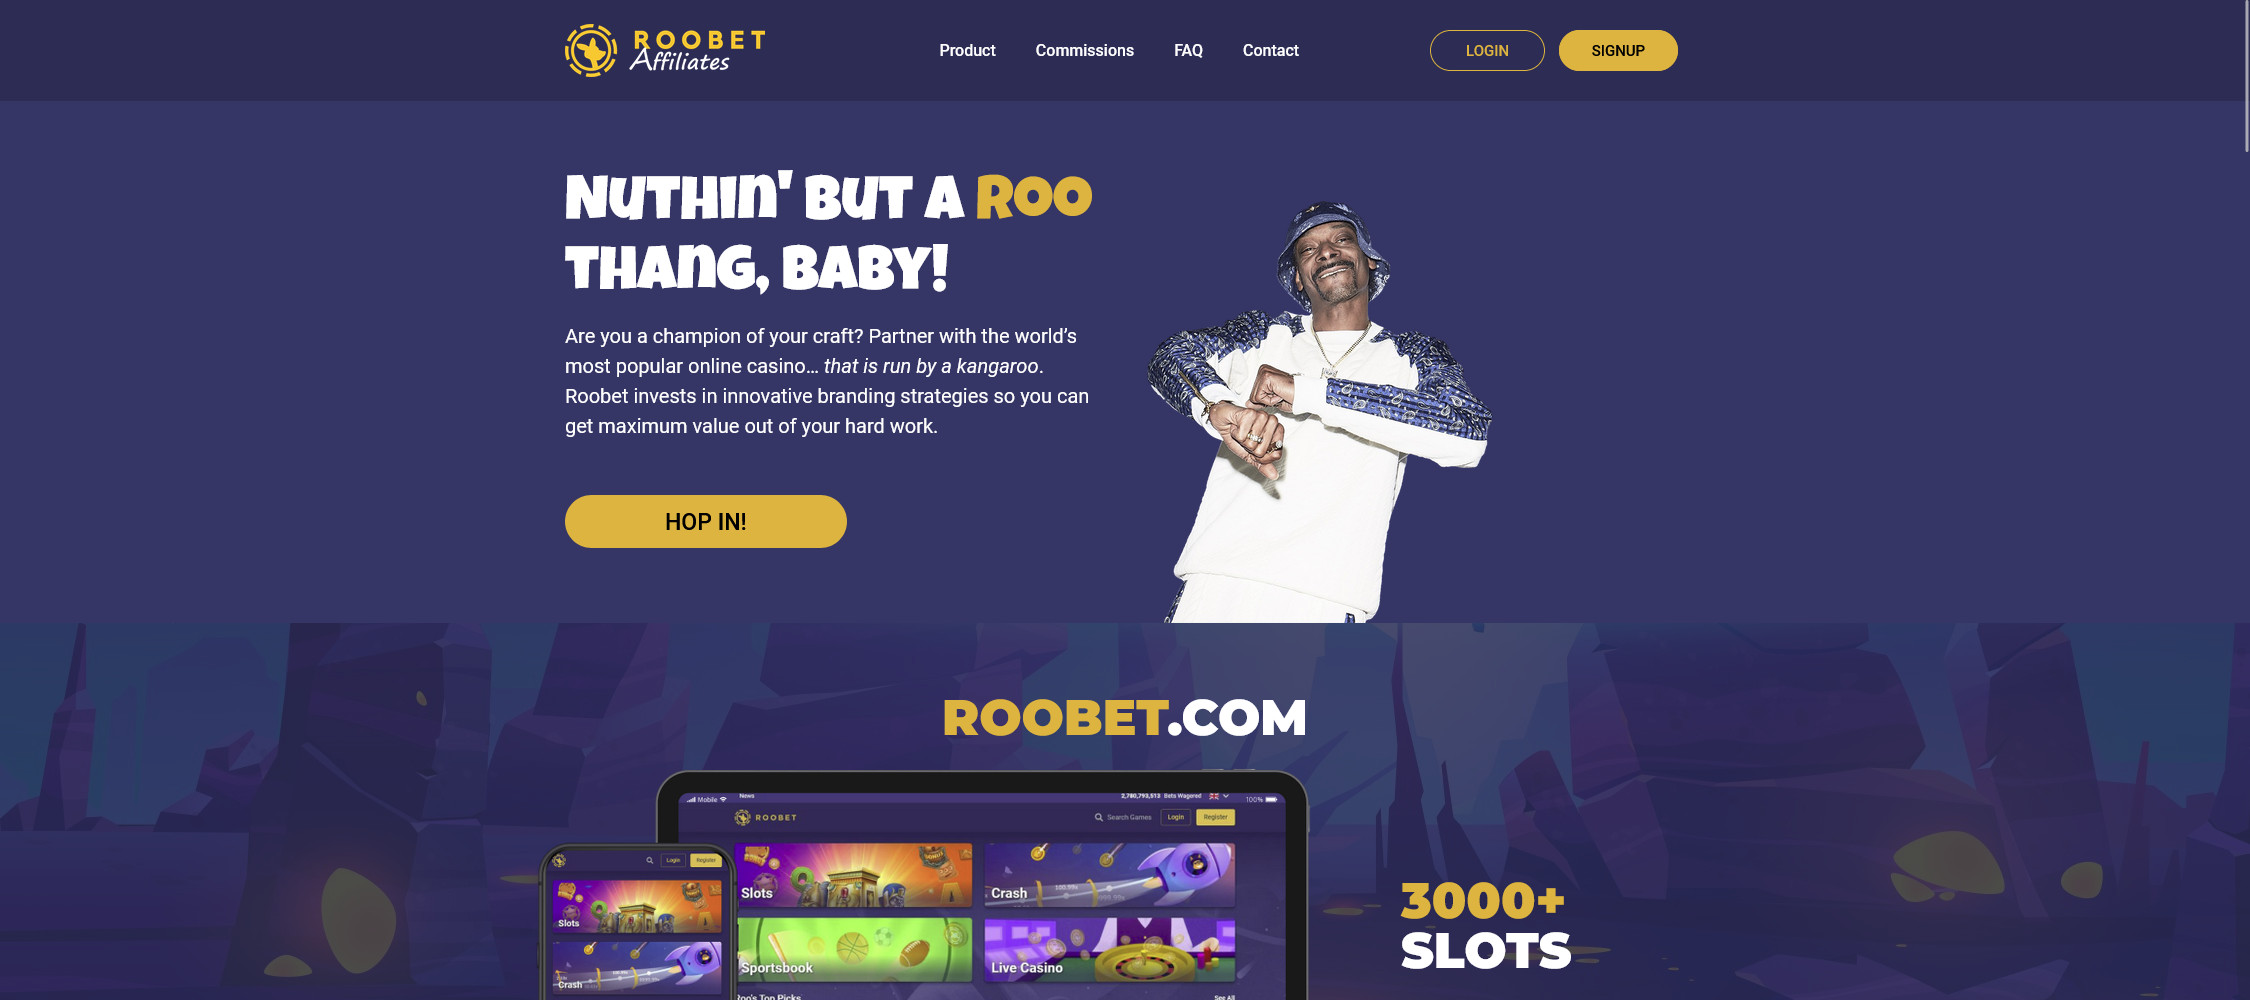 Roobet Affiliates website